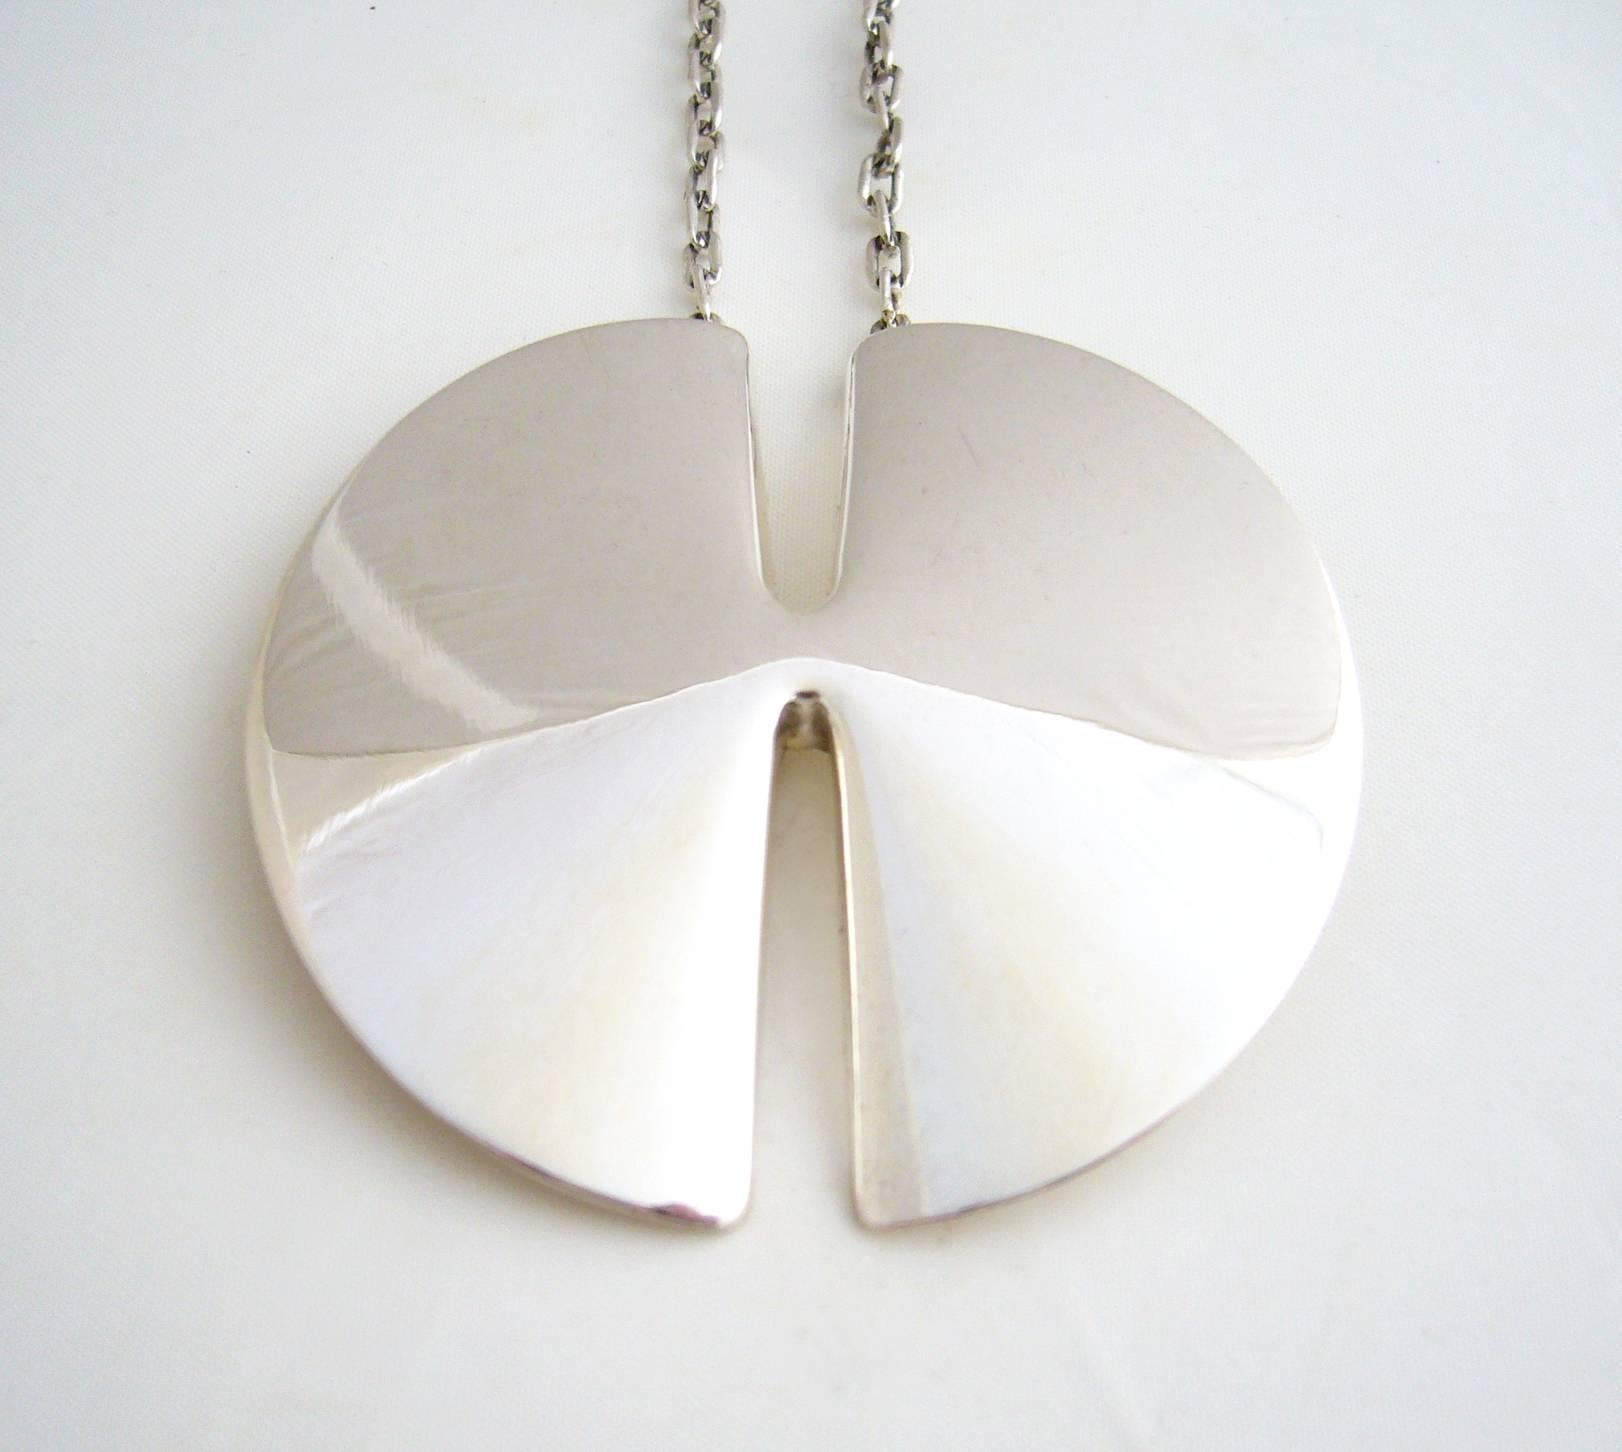 Sterling silver split disc necklace designed in 1958 by Nanna and Jorgen Ditzel for Georg Jensen.  Pendant measures 2.5